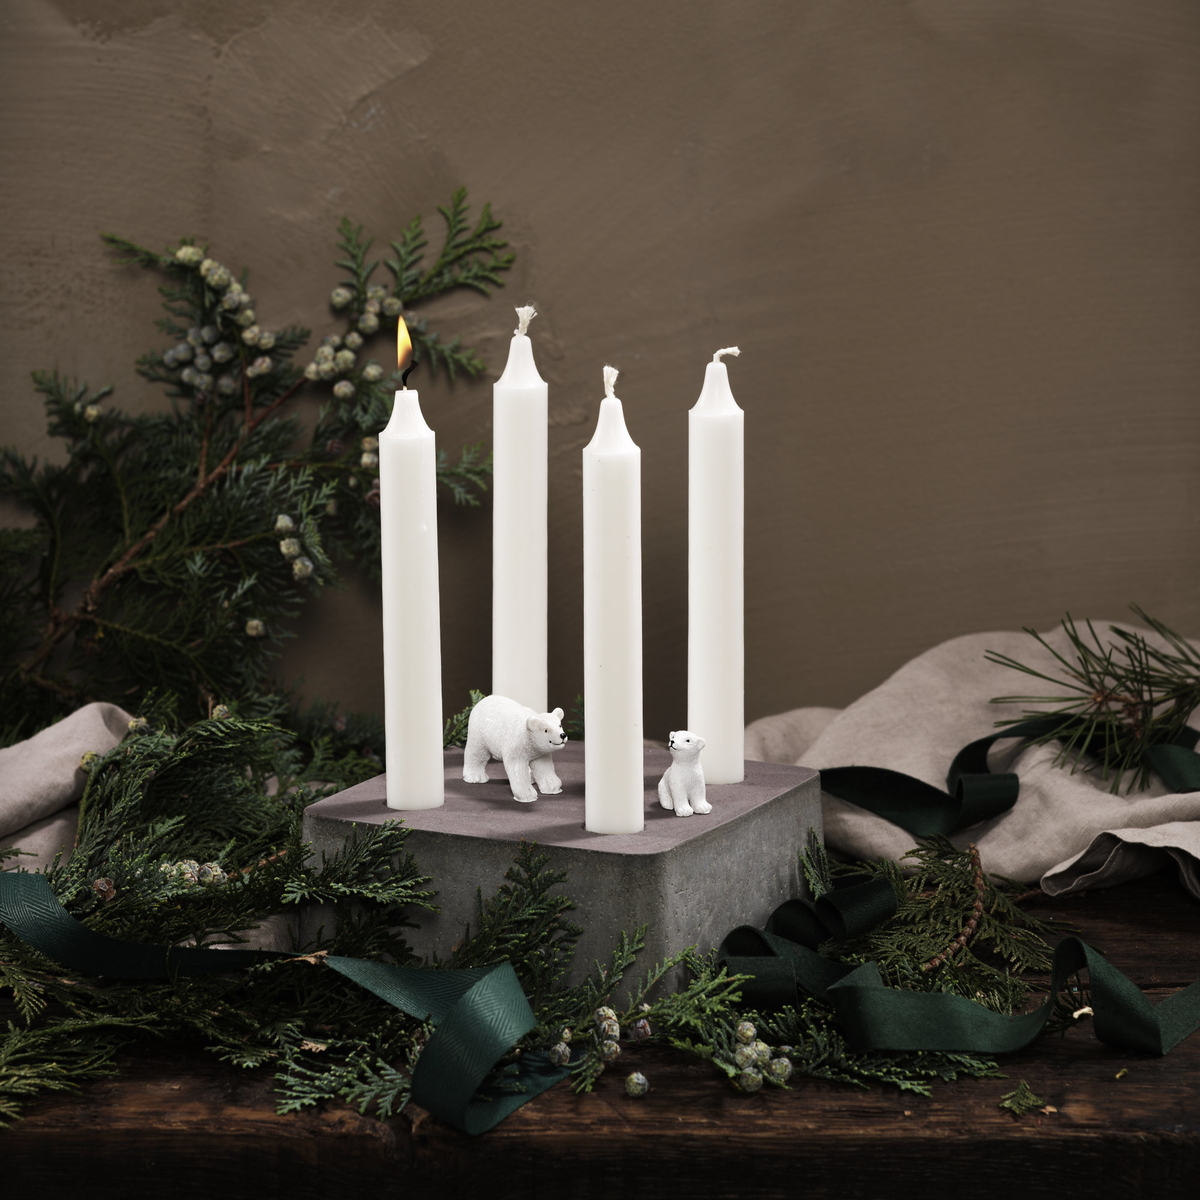 Make a concrete Advent candle holder